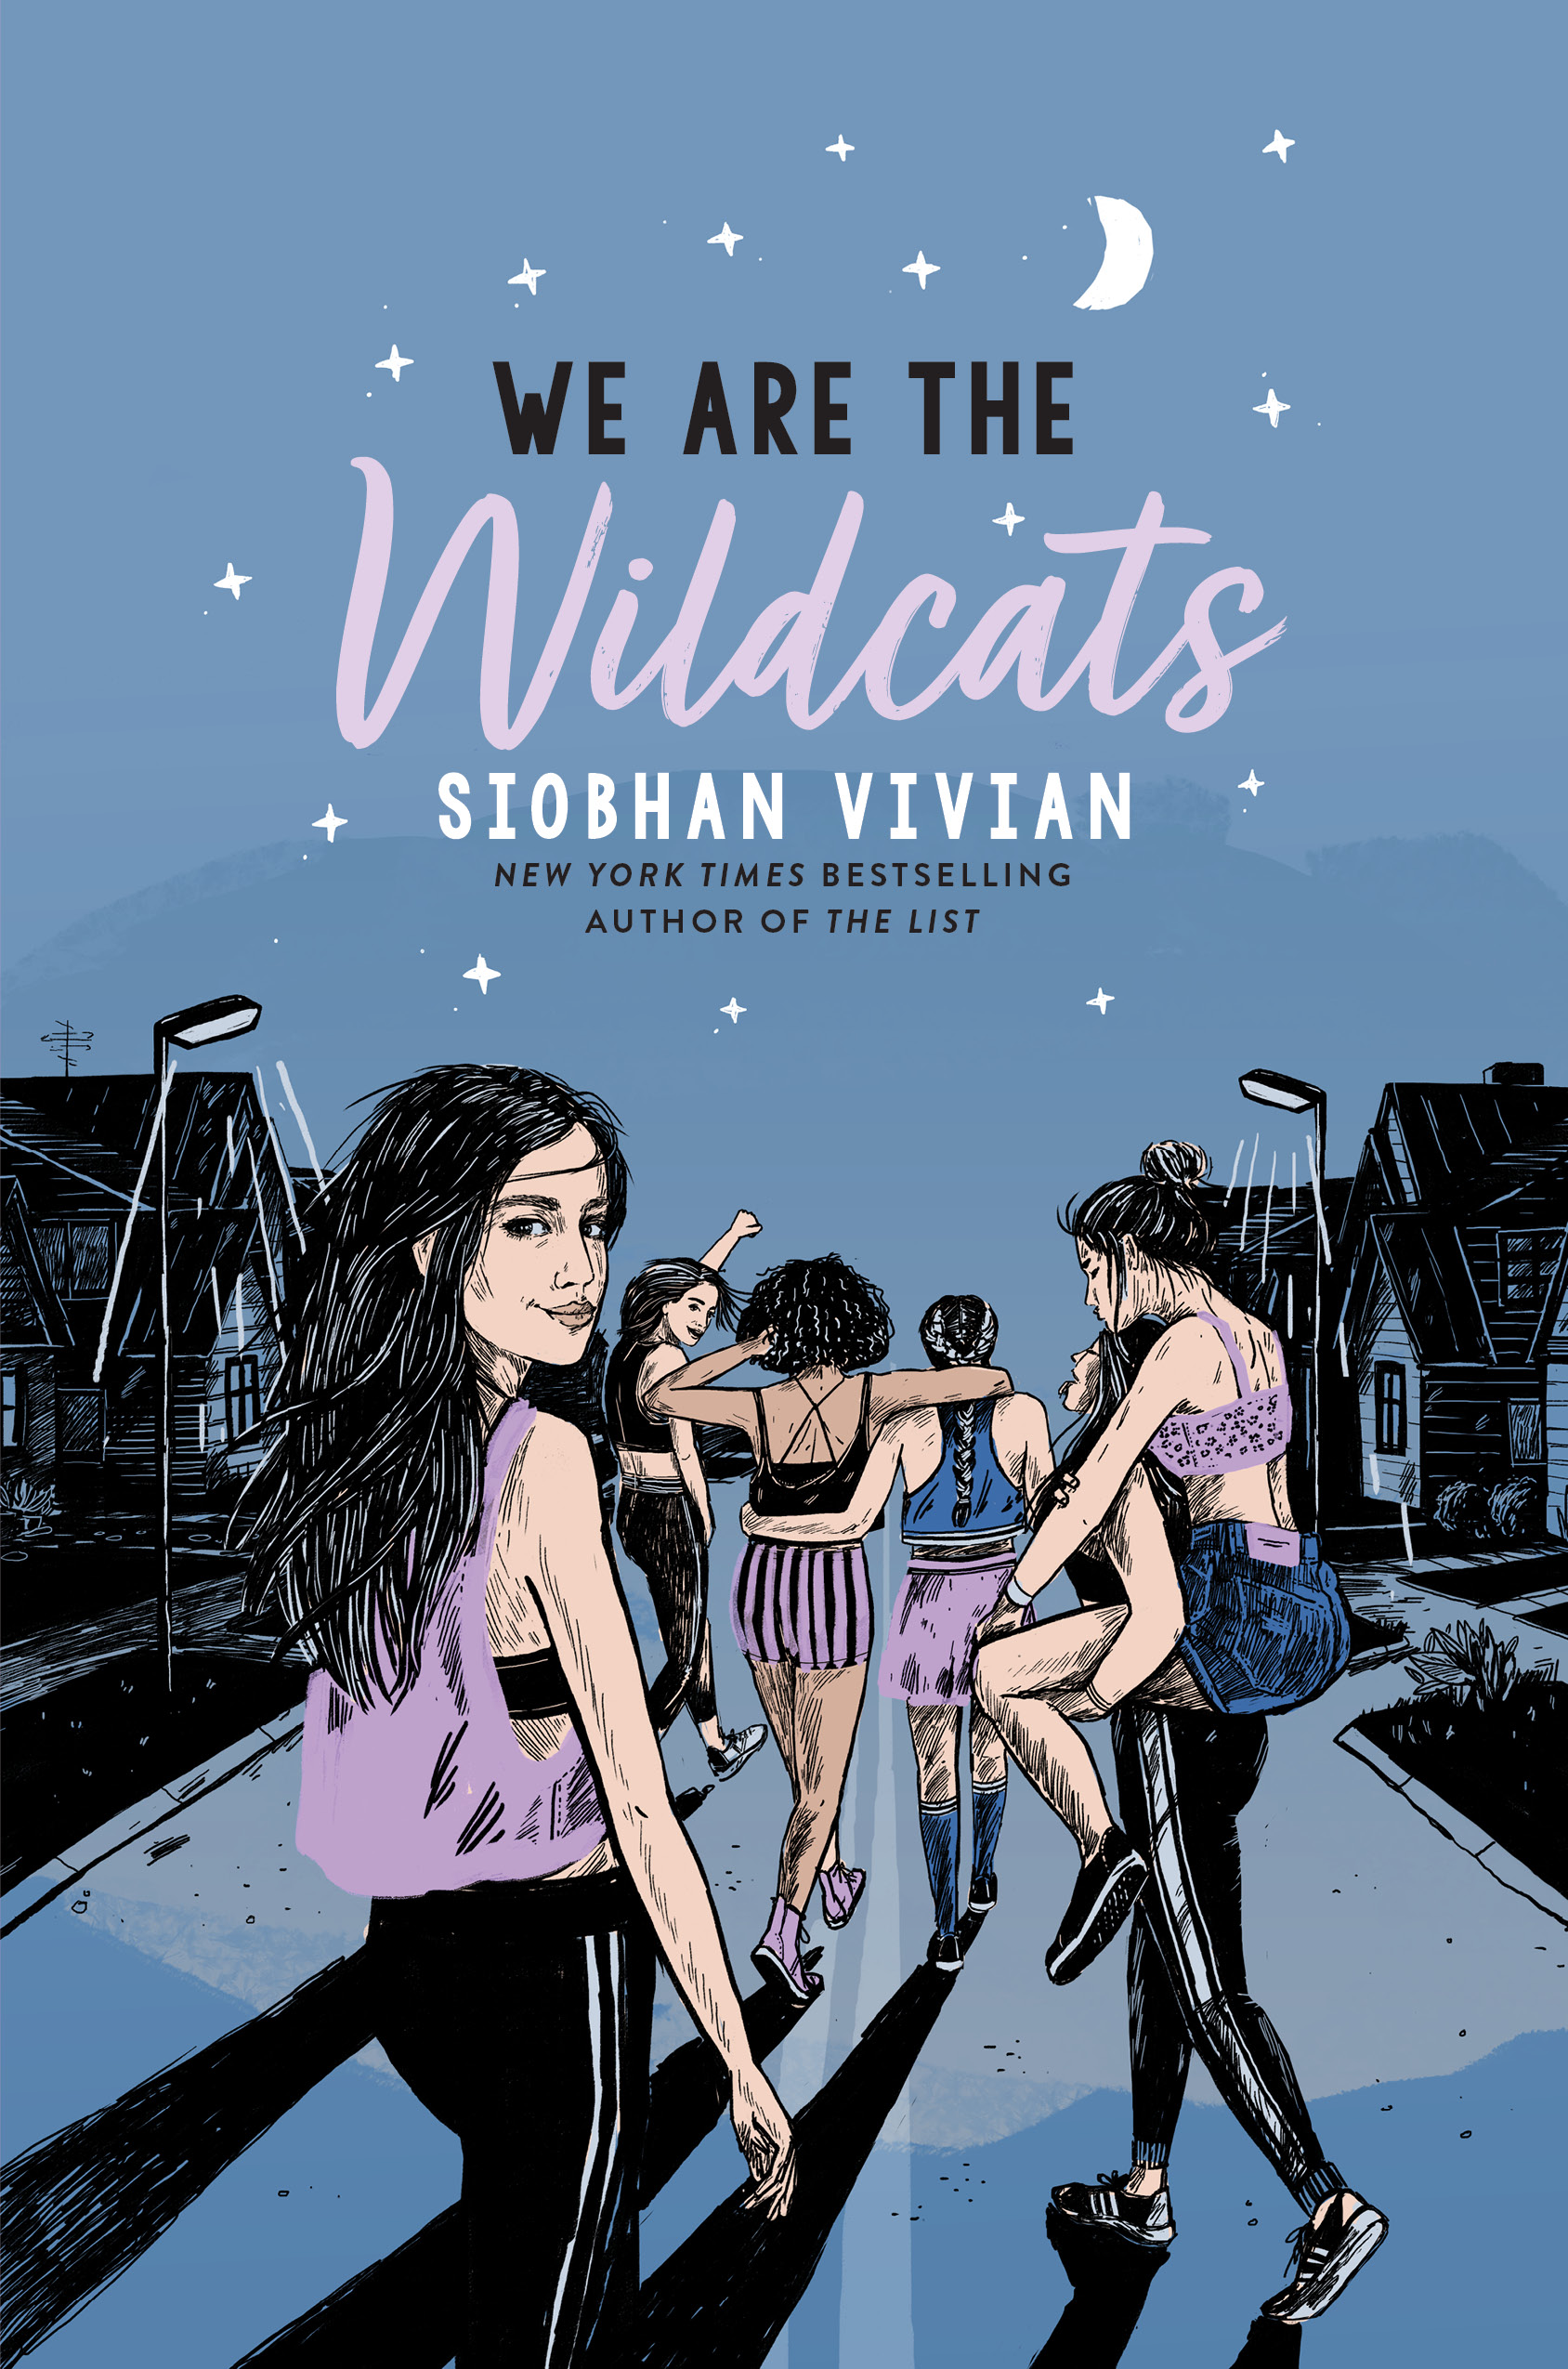 Siobhan Vivian: We Are the Wildcats (2020, Simon & Schuster)